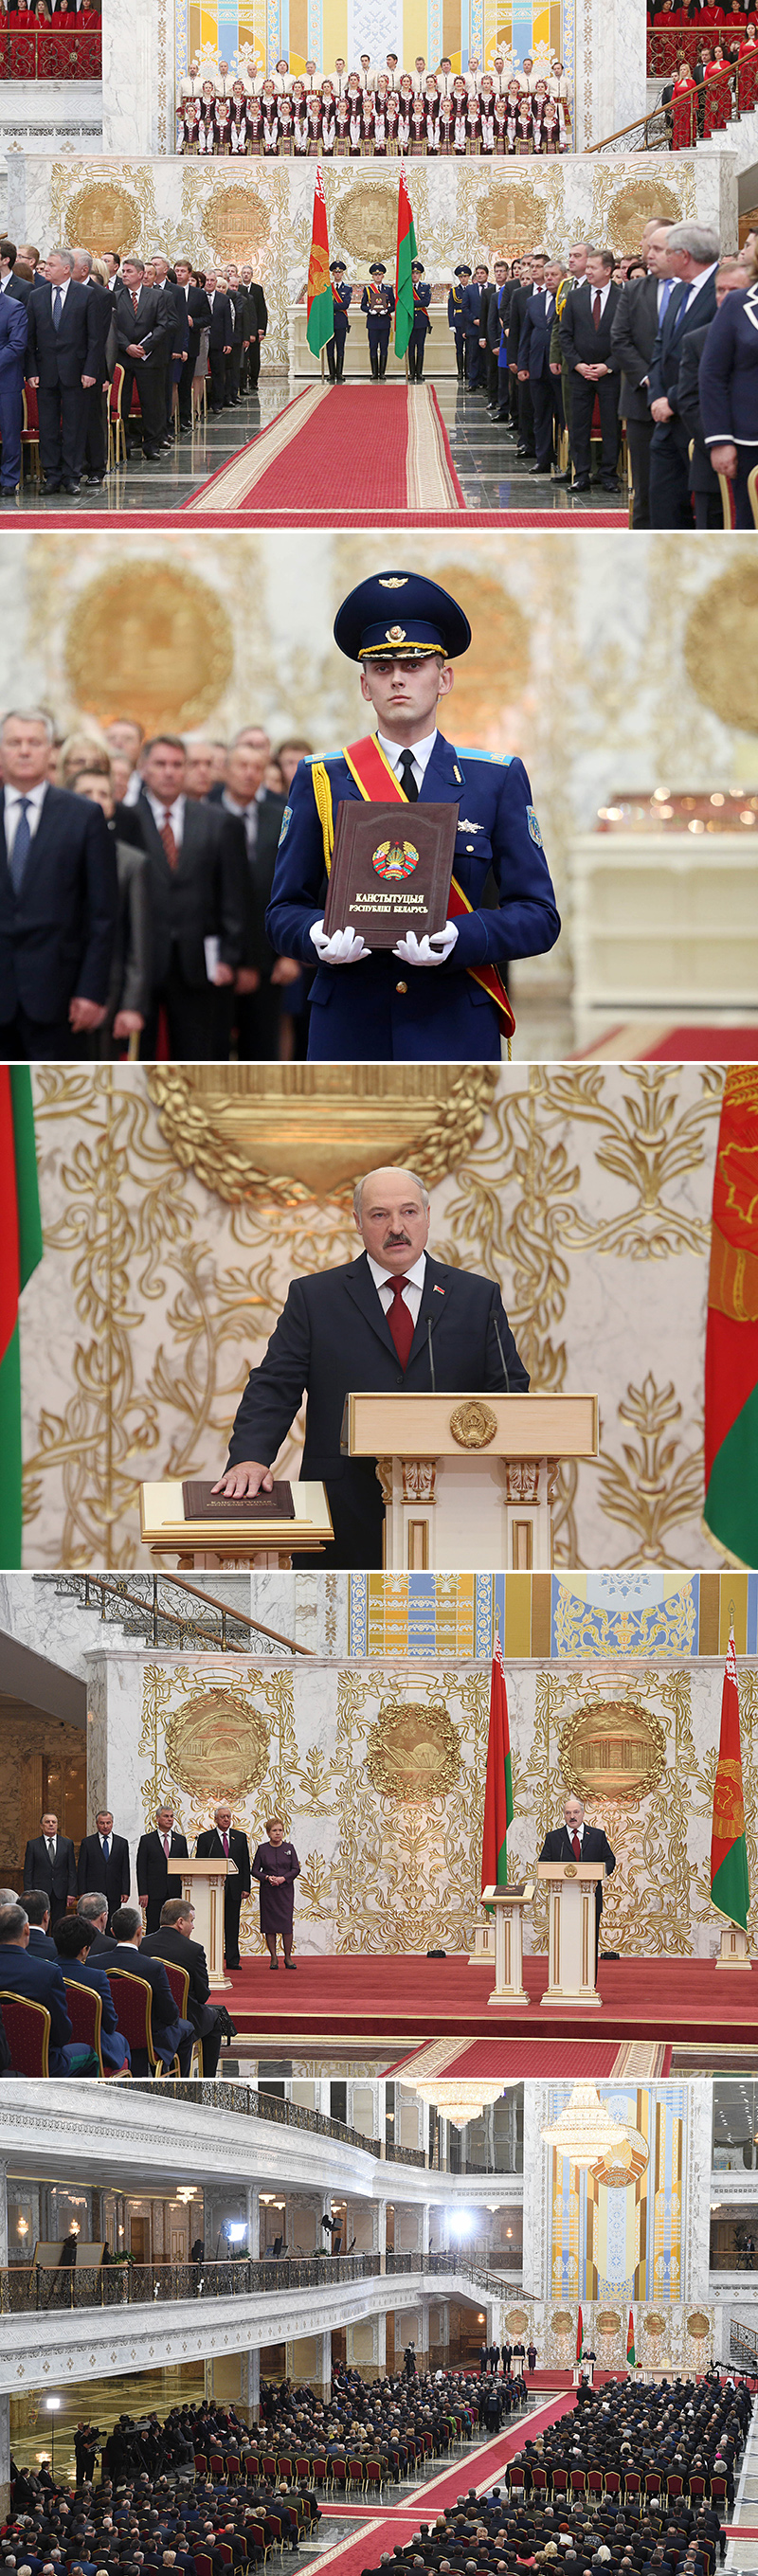 Belarus president inauguration ceremony (2015)